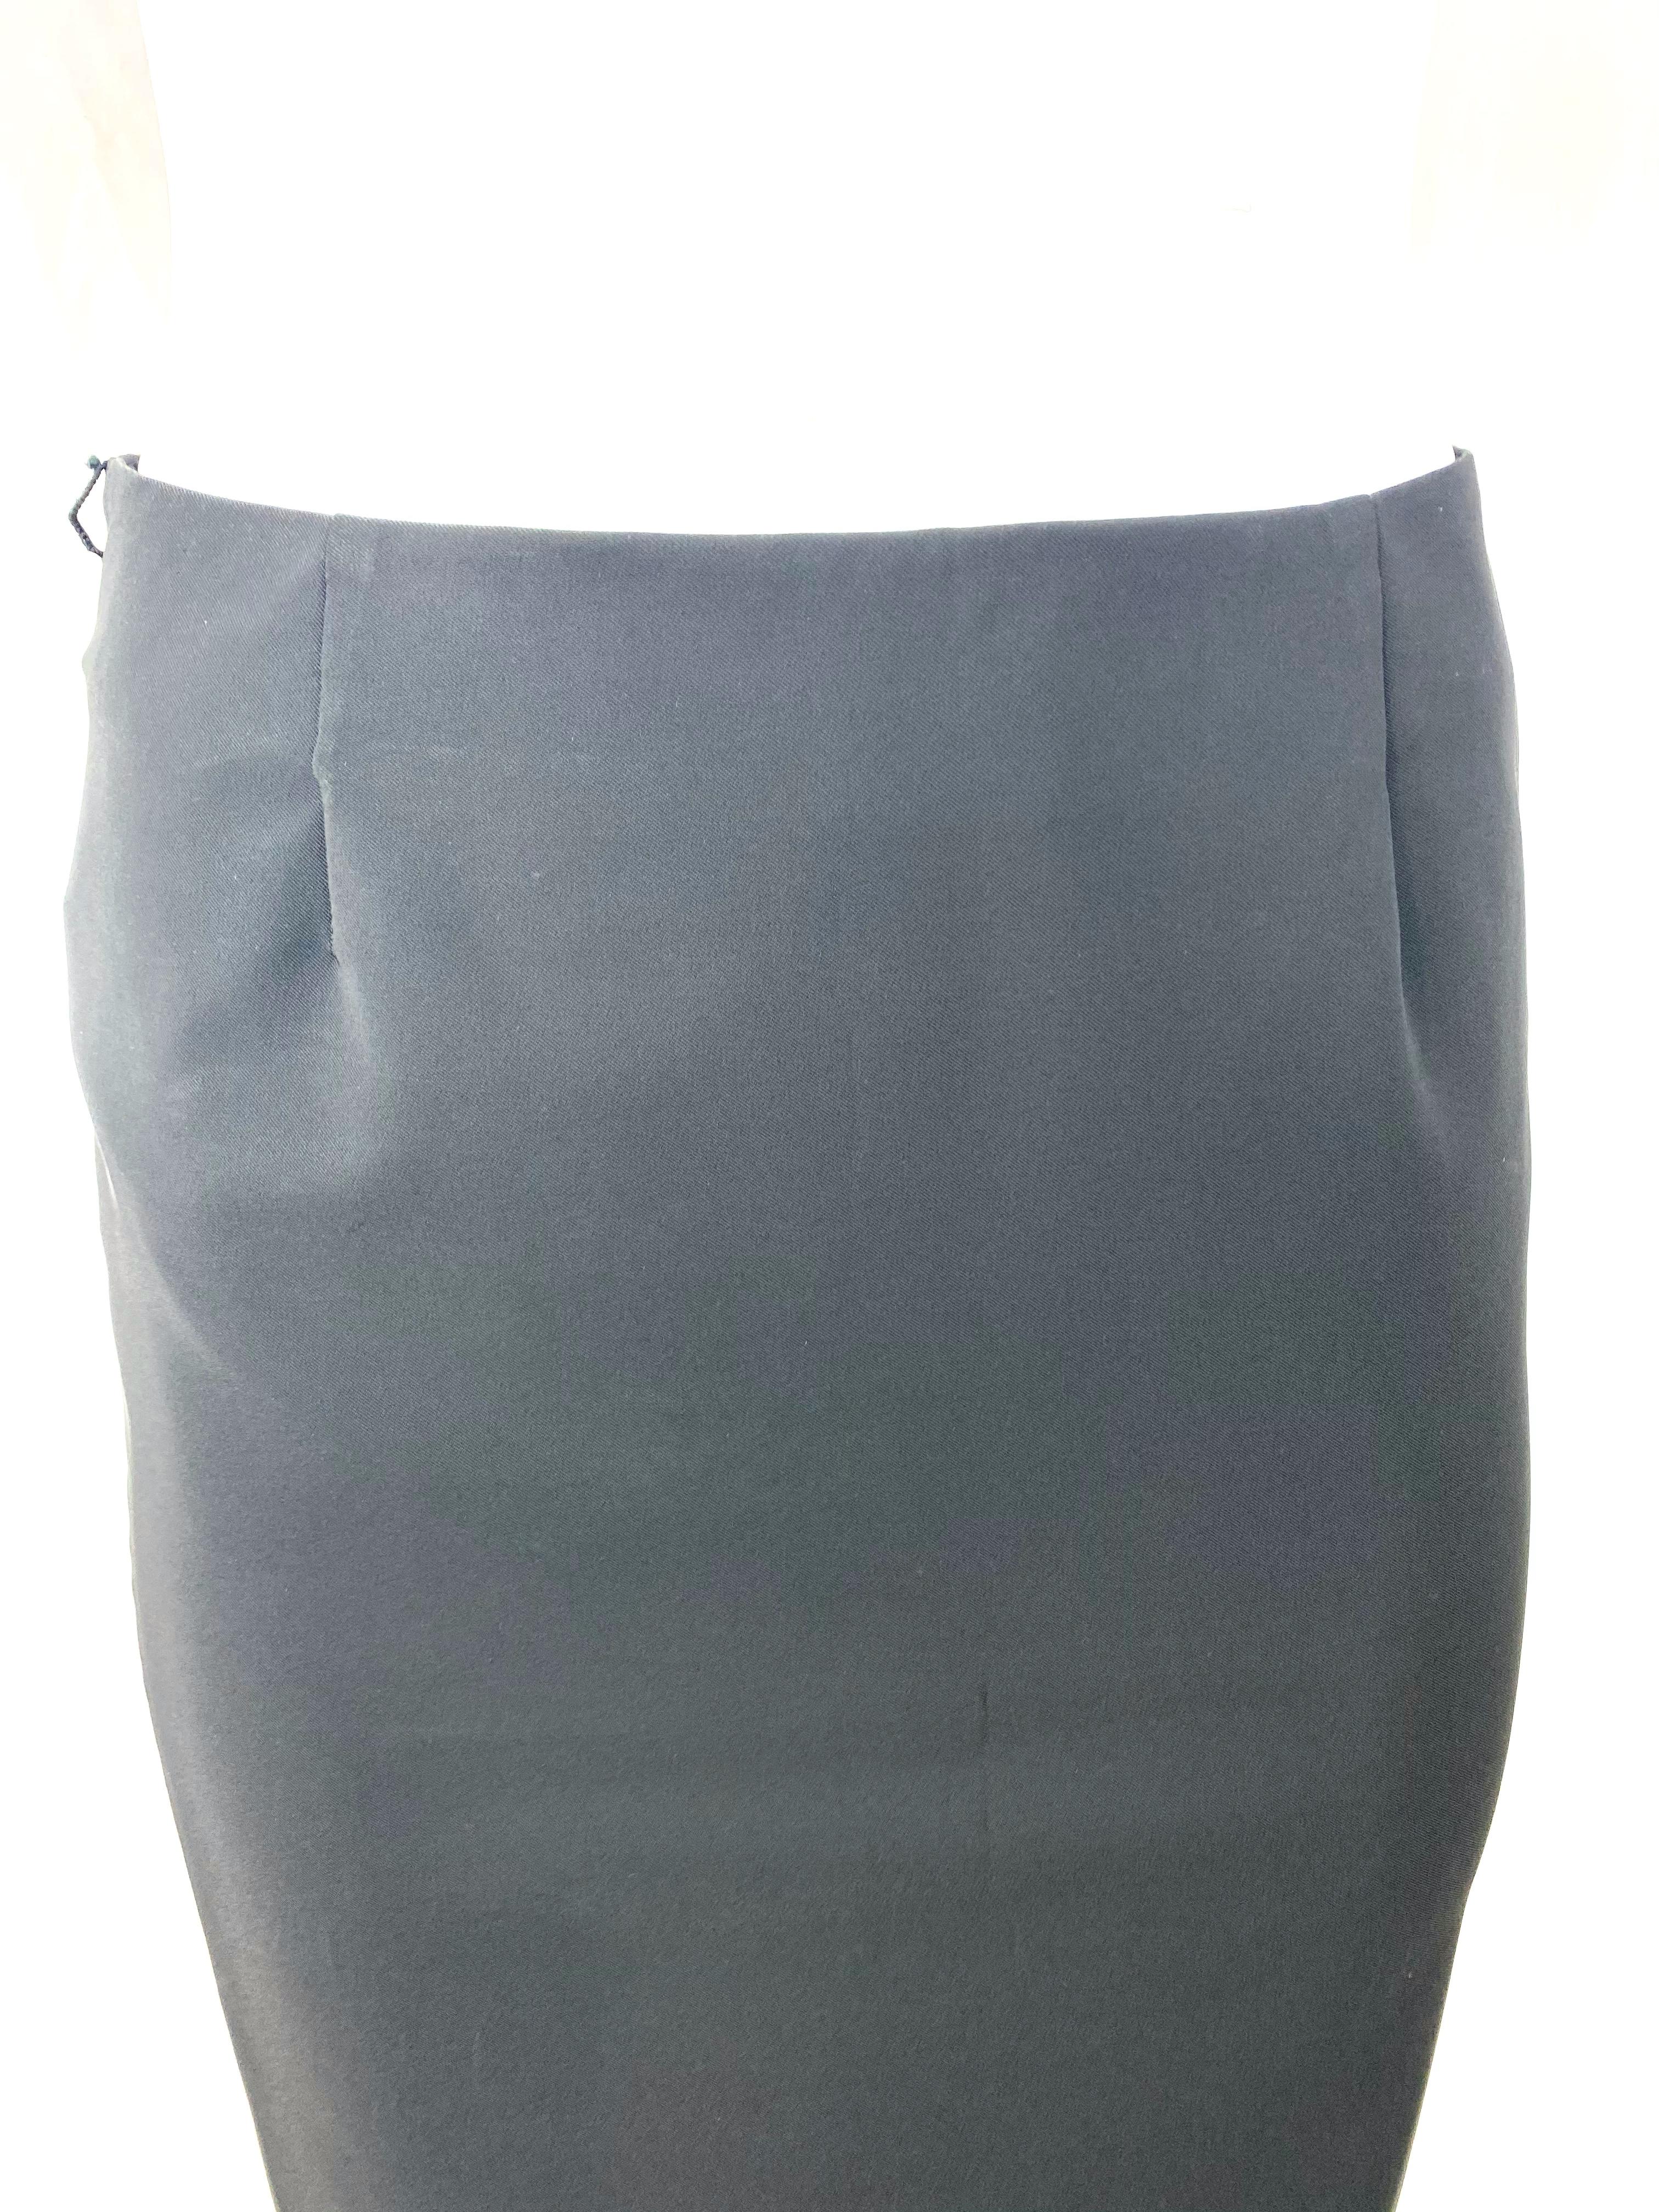 NoName formal skirt discount 91% WOMEN FASHION Skirts Formal skirt Embroidery Black S 